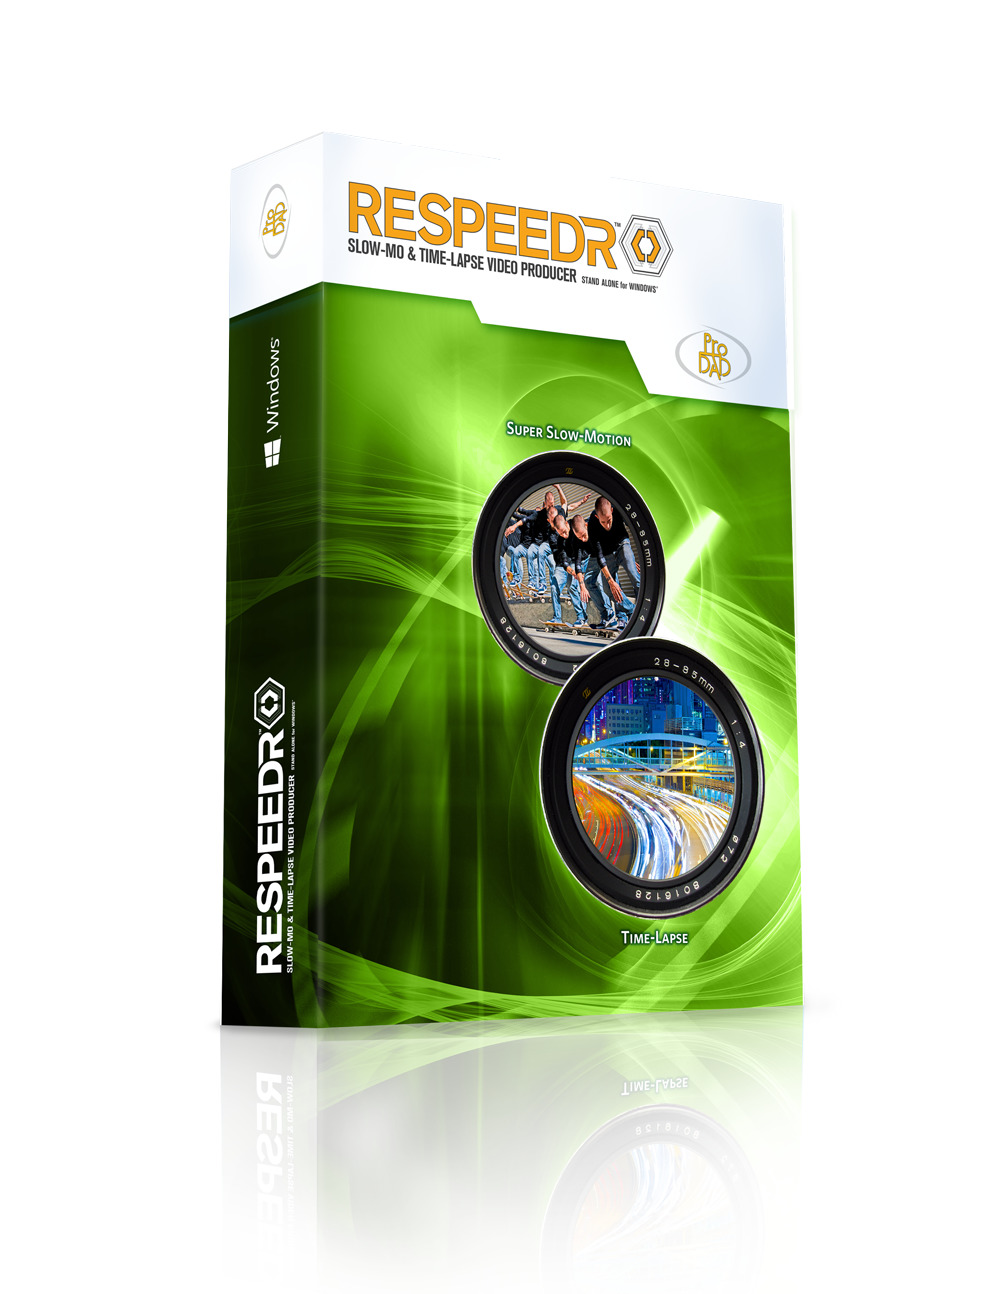 proDAD Releases ReSpeedr Super Slow-Motion & Time-lapse Video Producer Application 24